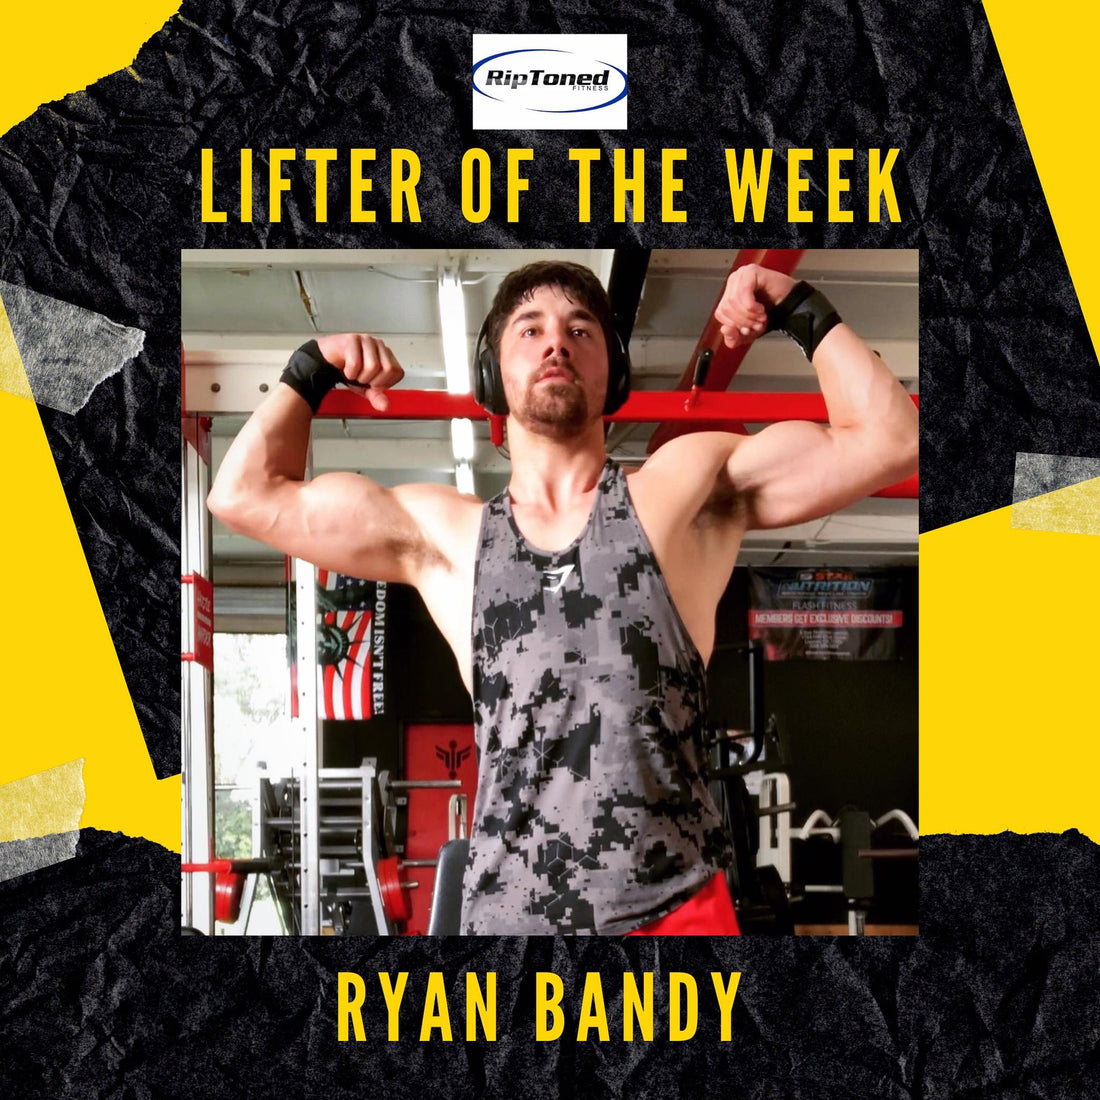 Lifter of the Week - Ryan Bandy - Rip Toned